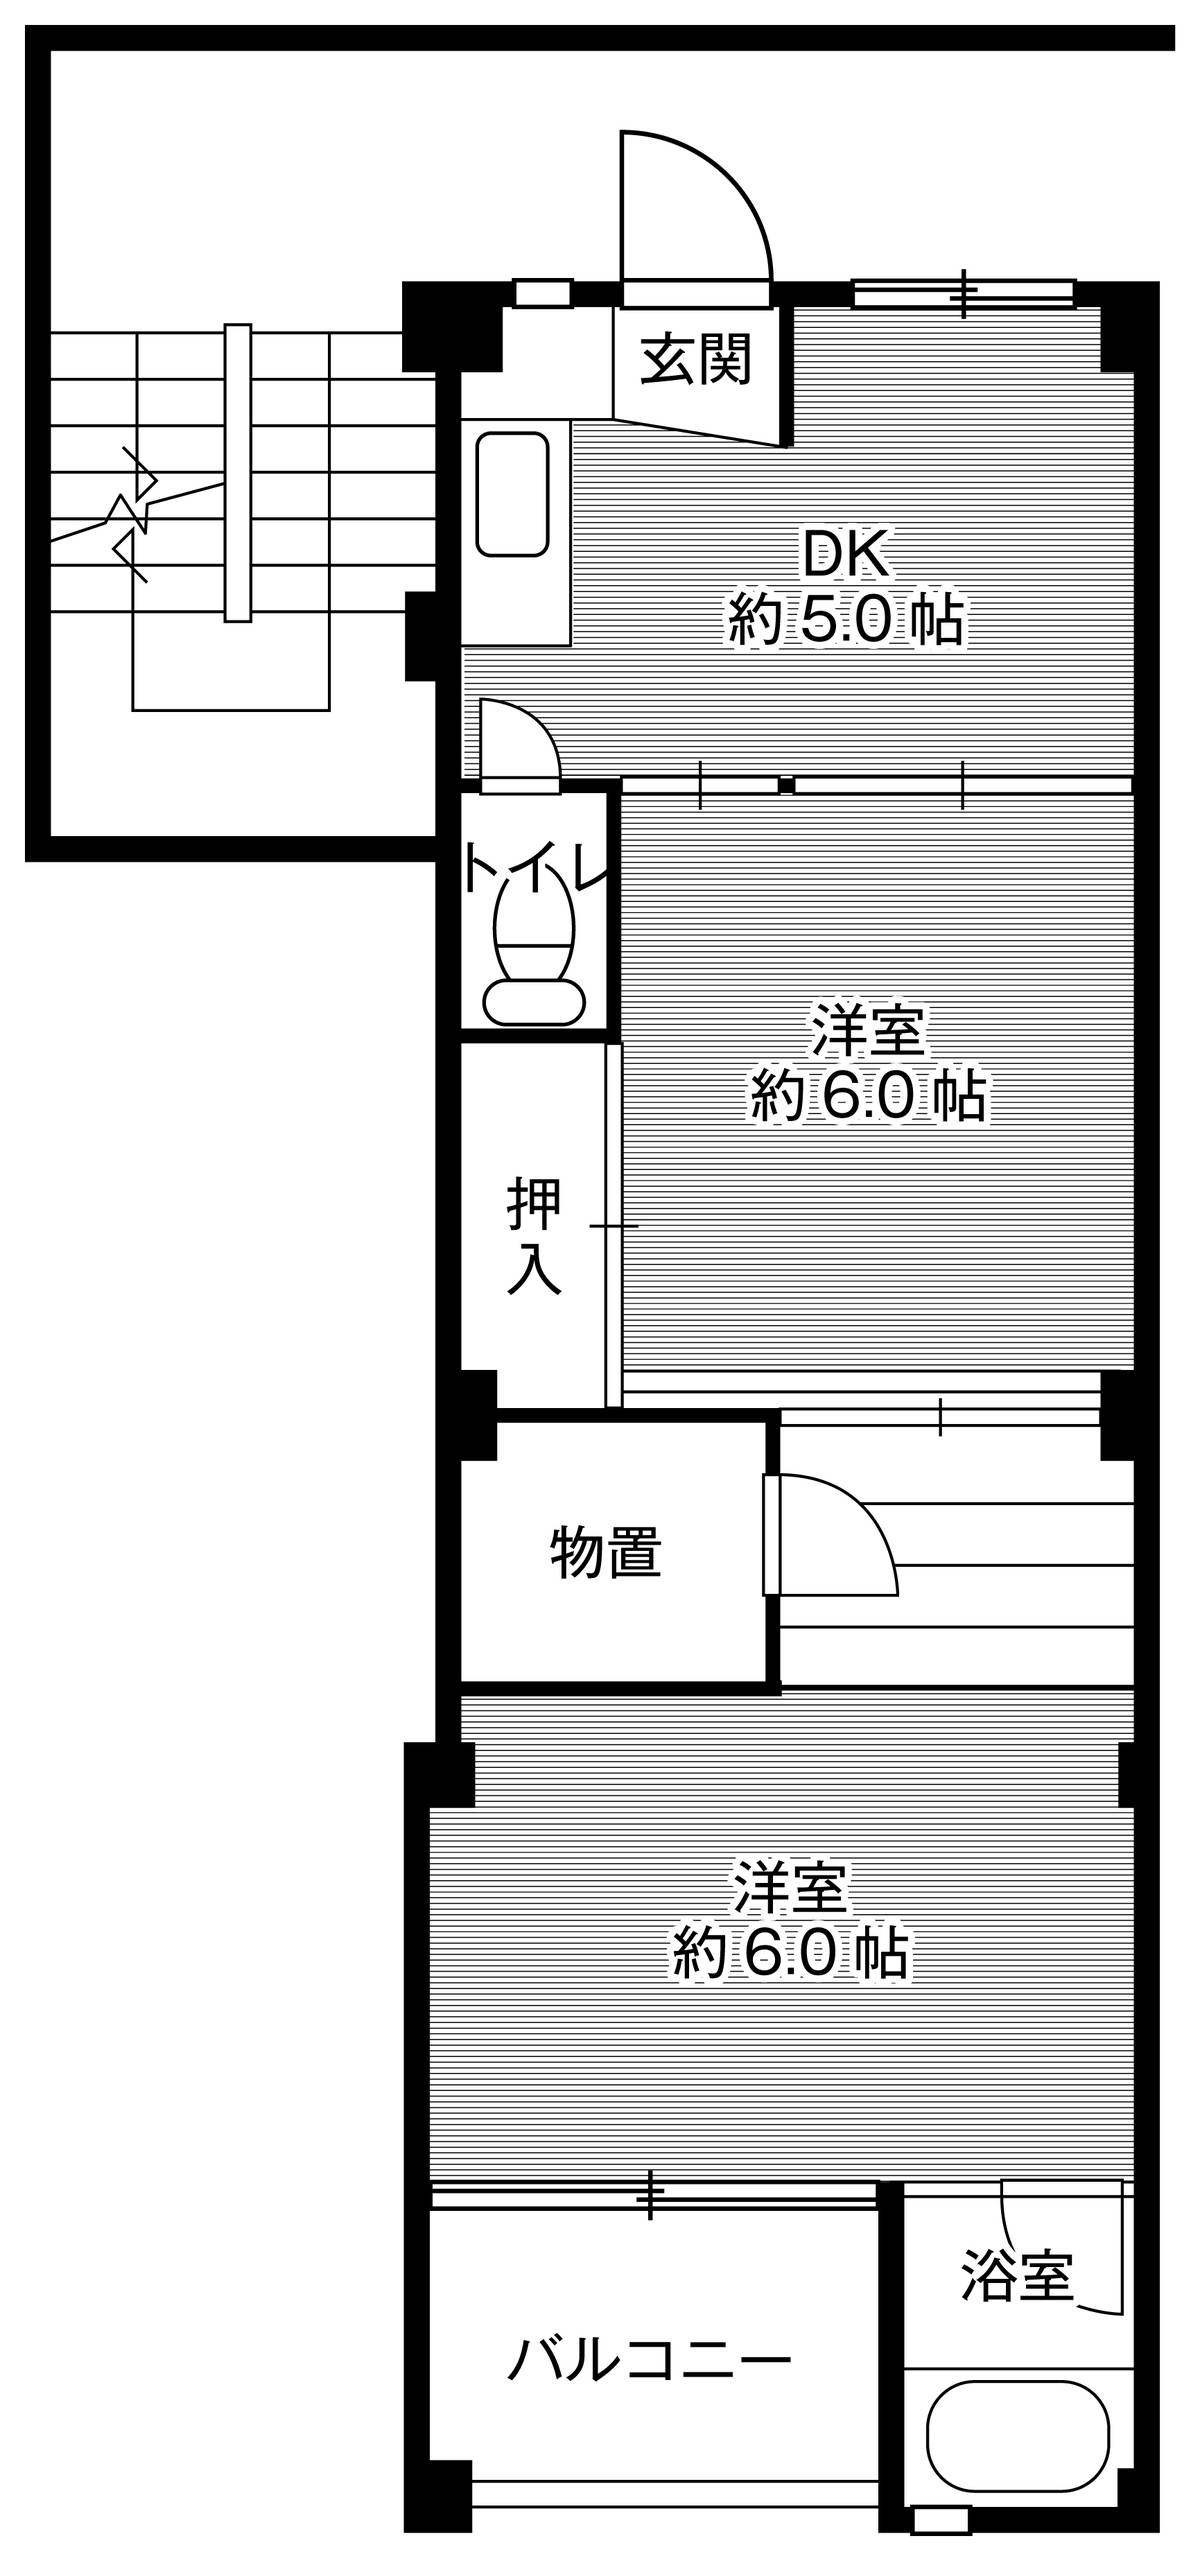 2DK floorplan of Village House Daiwa in Komaki-shi